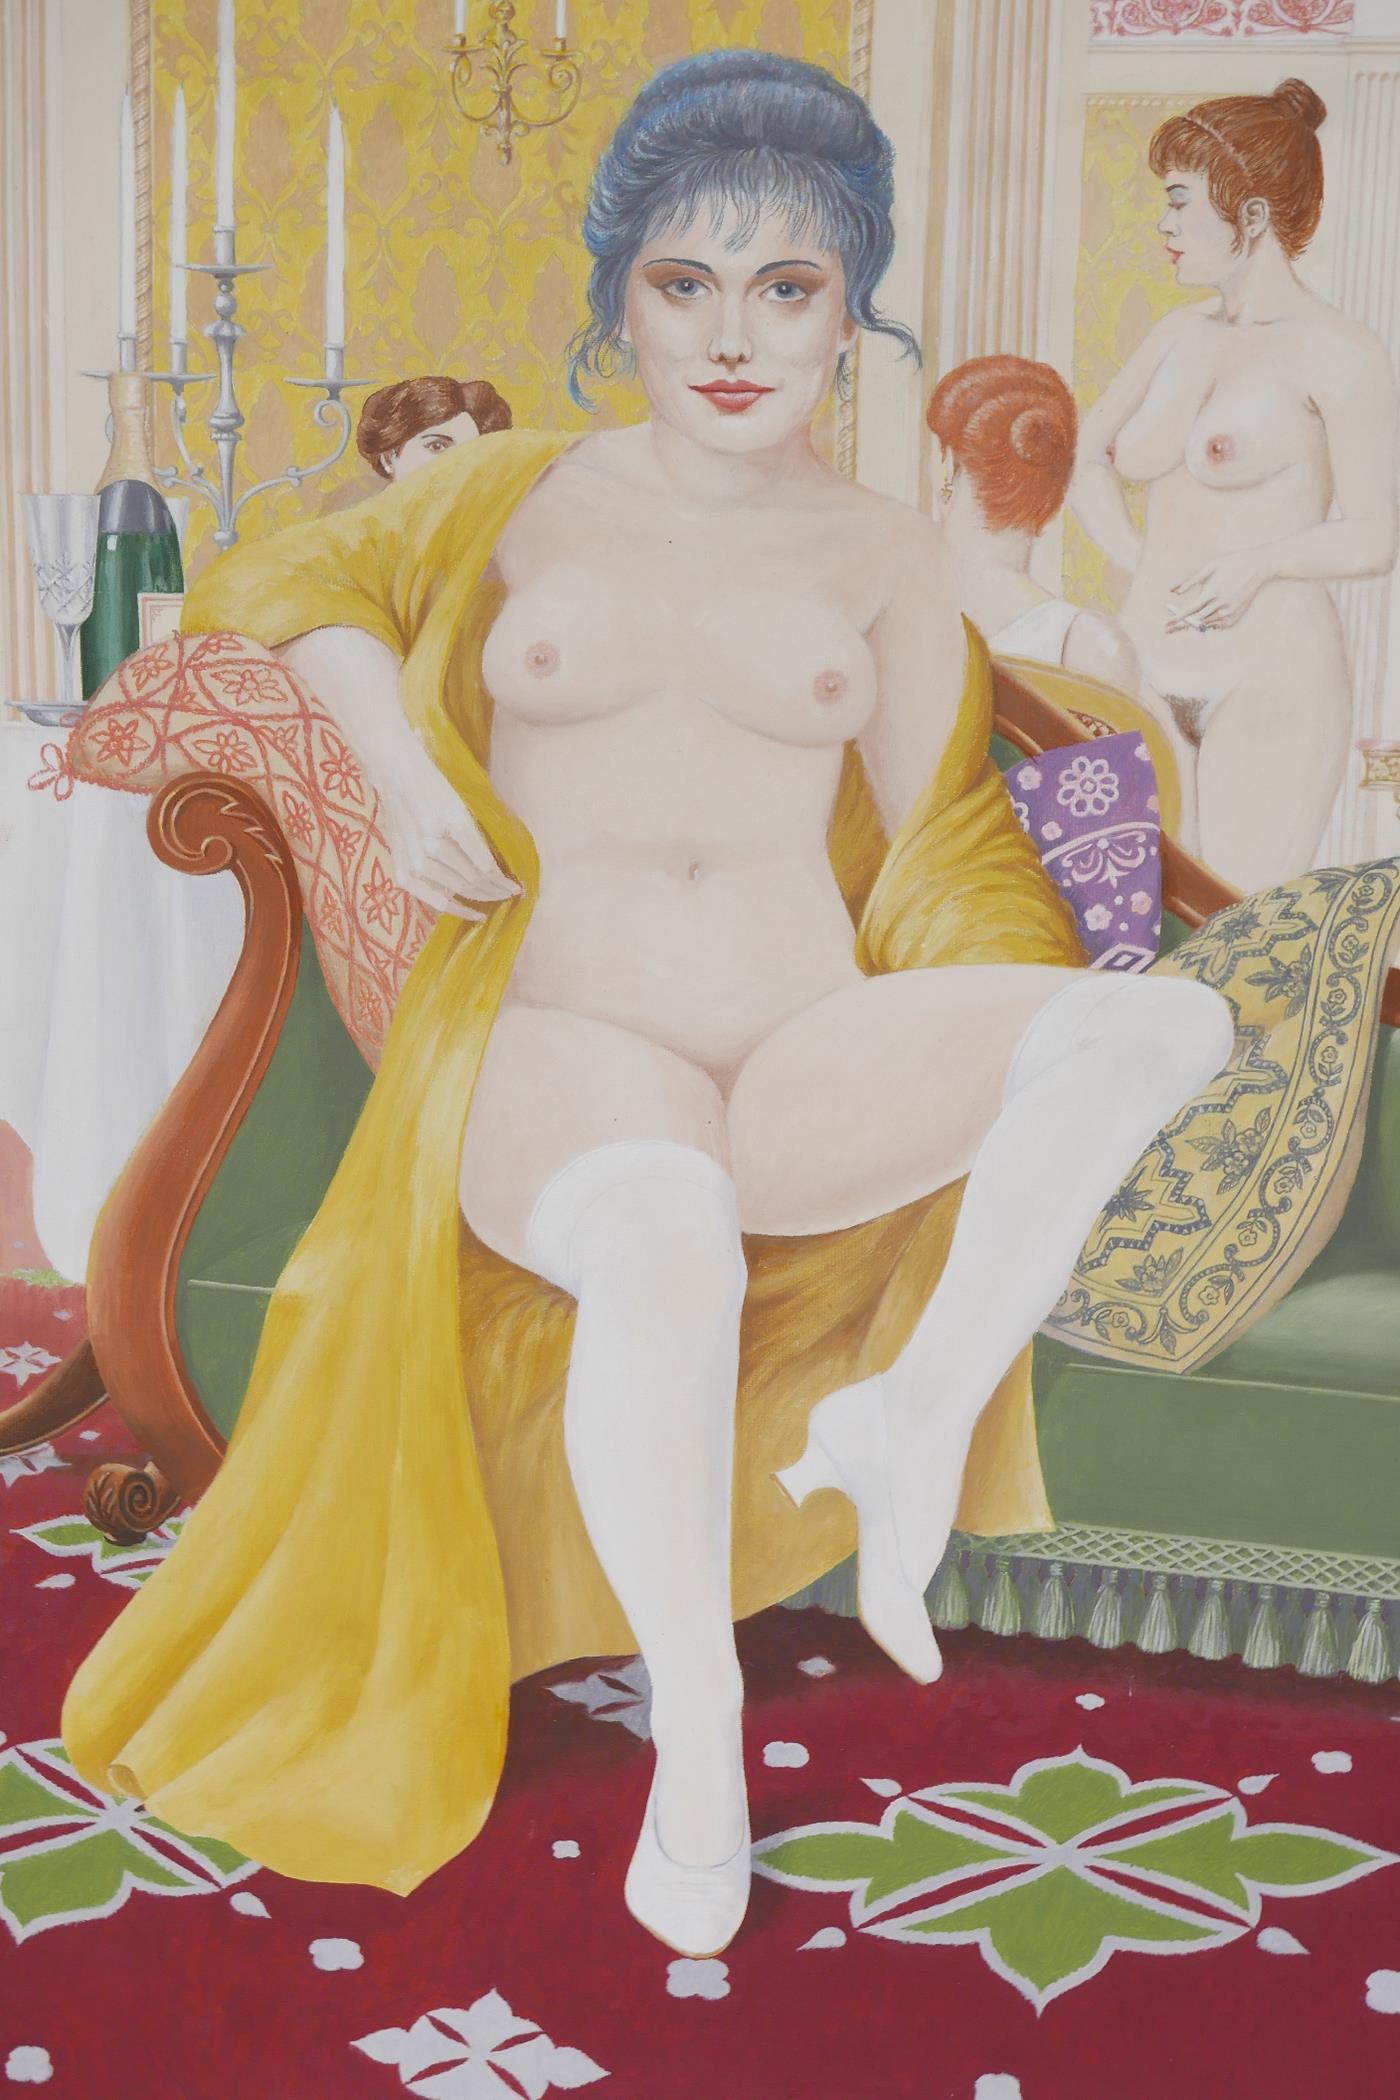 Millard (British, C20th), three paintings depicting female nudes through history, Lady Godiva, - Image 3 of 4